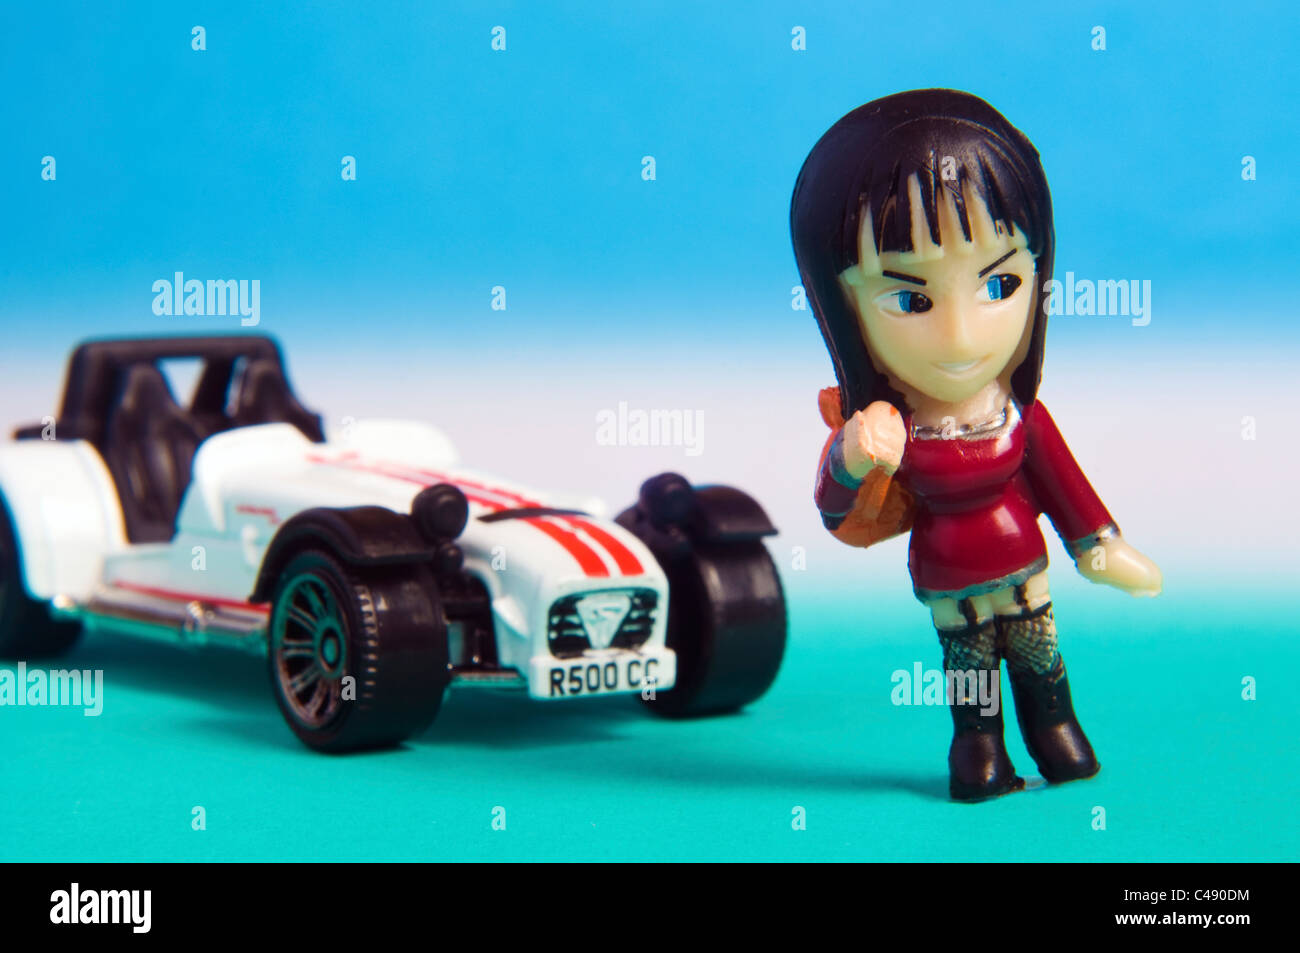 Miniatur-Spielzeug-Auto mit Miniatur-Kunststoff-Puppe Stockfoto